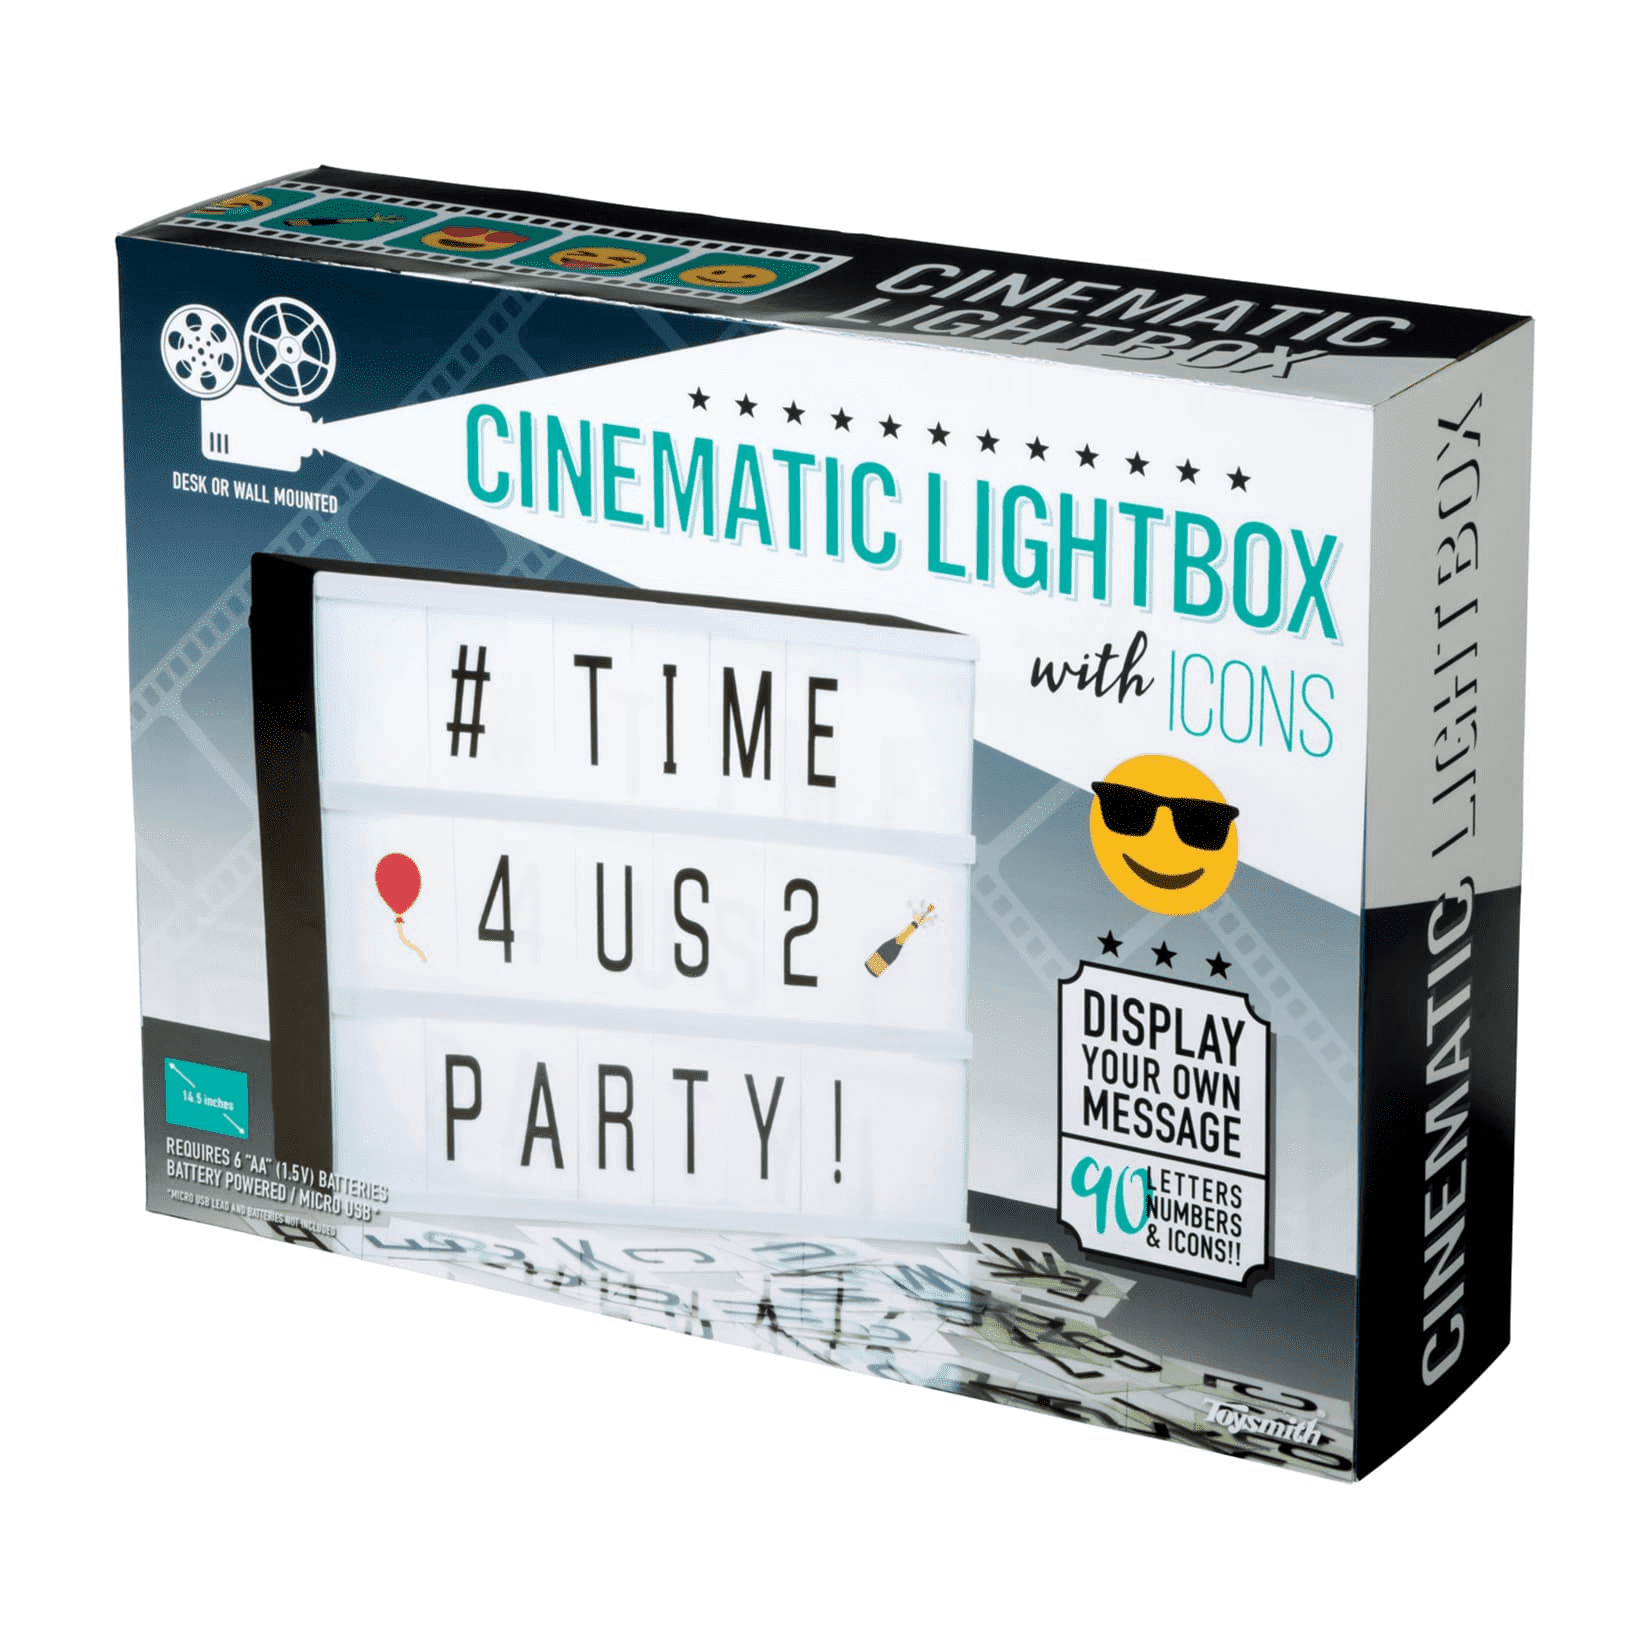 Cinematic Lightbox